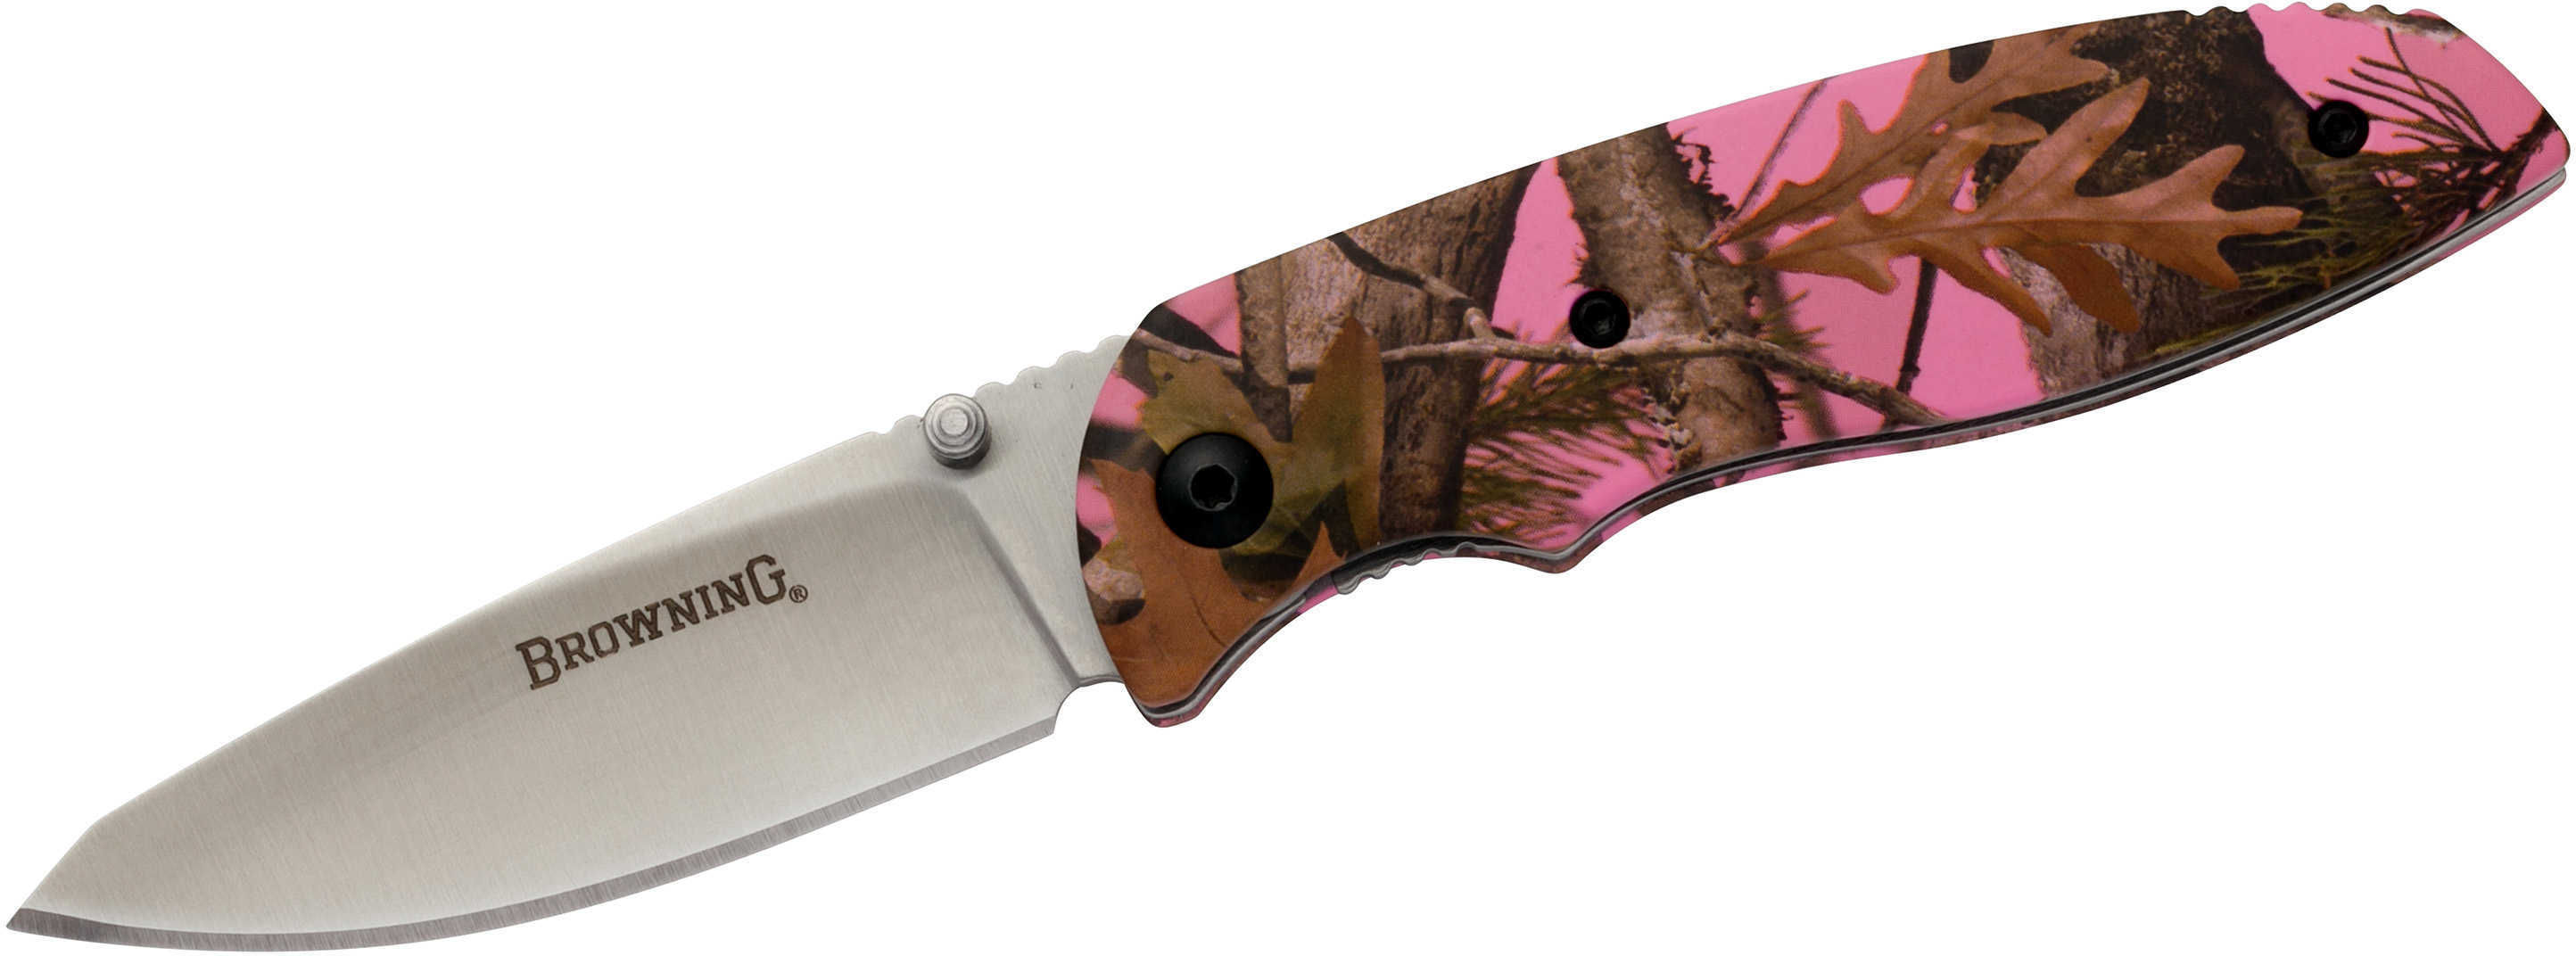 Browning EDC Folder Knife Pink Camouflage Md: 3220250